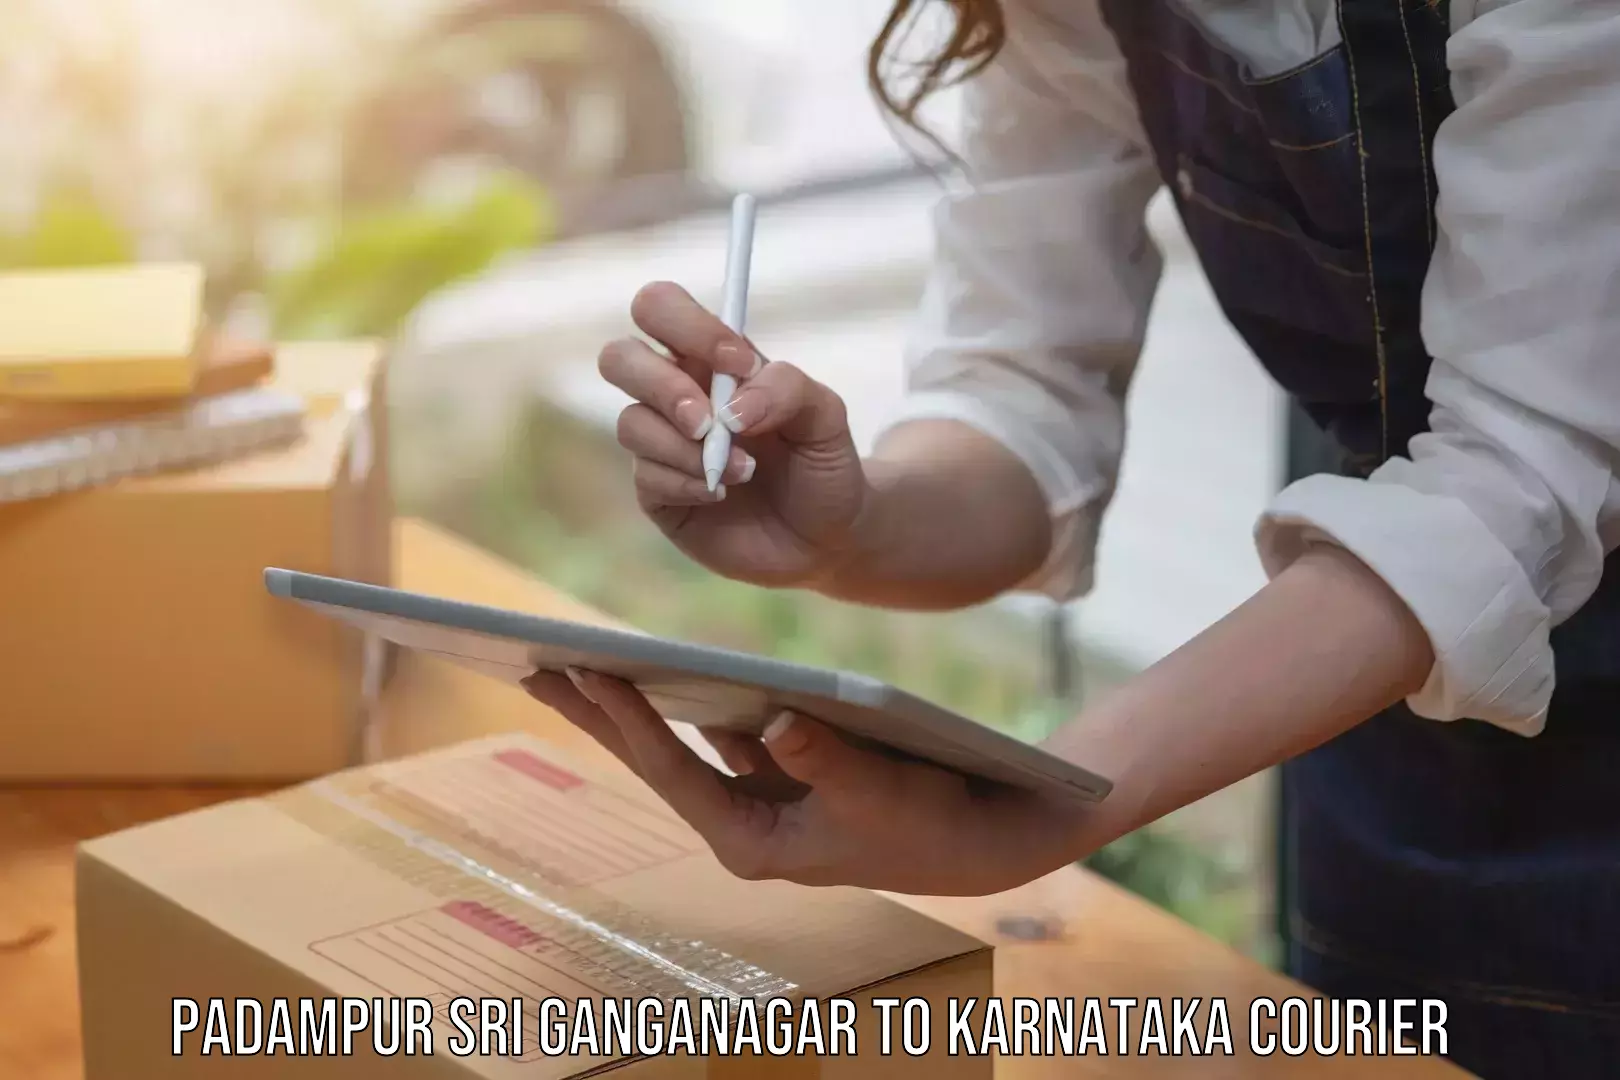 Package delivery network Padampur Sri Ganganagar to Shanivarasanthe